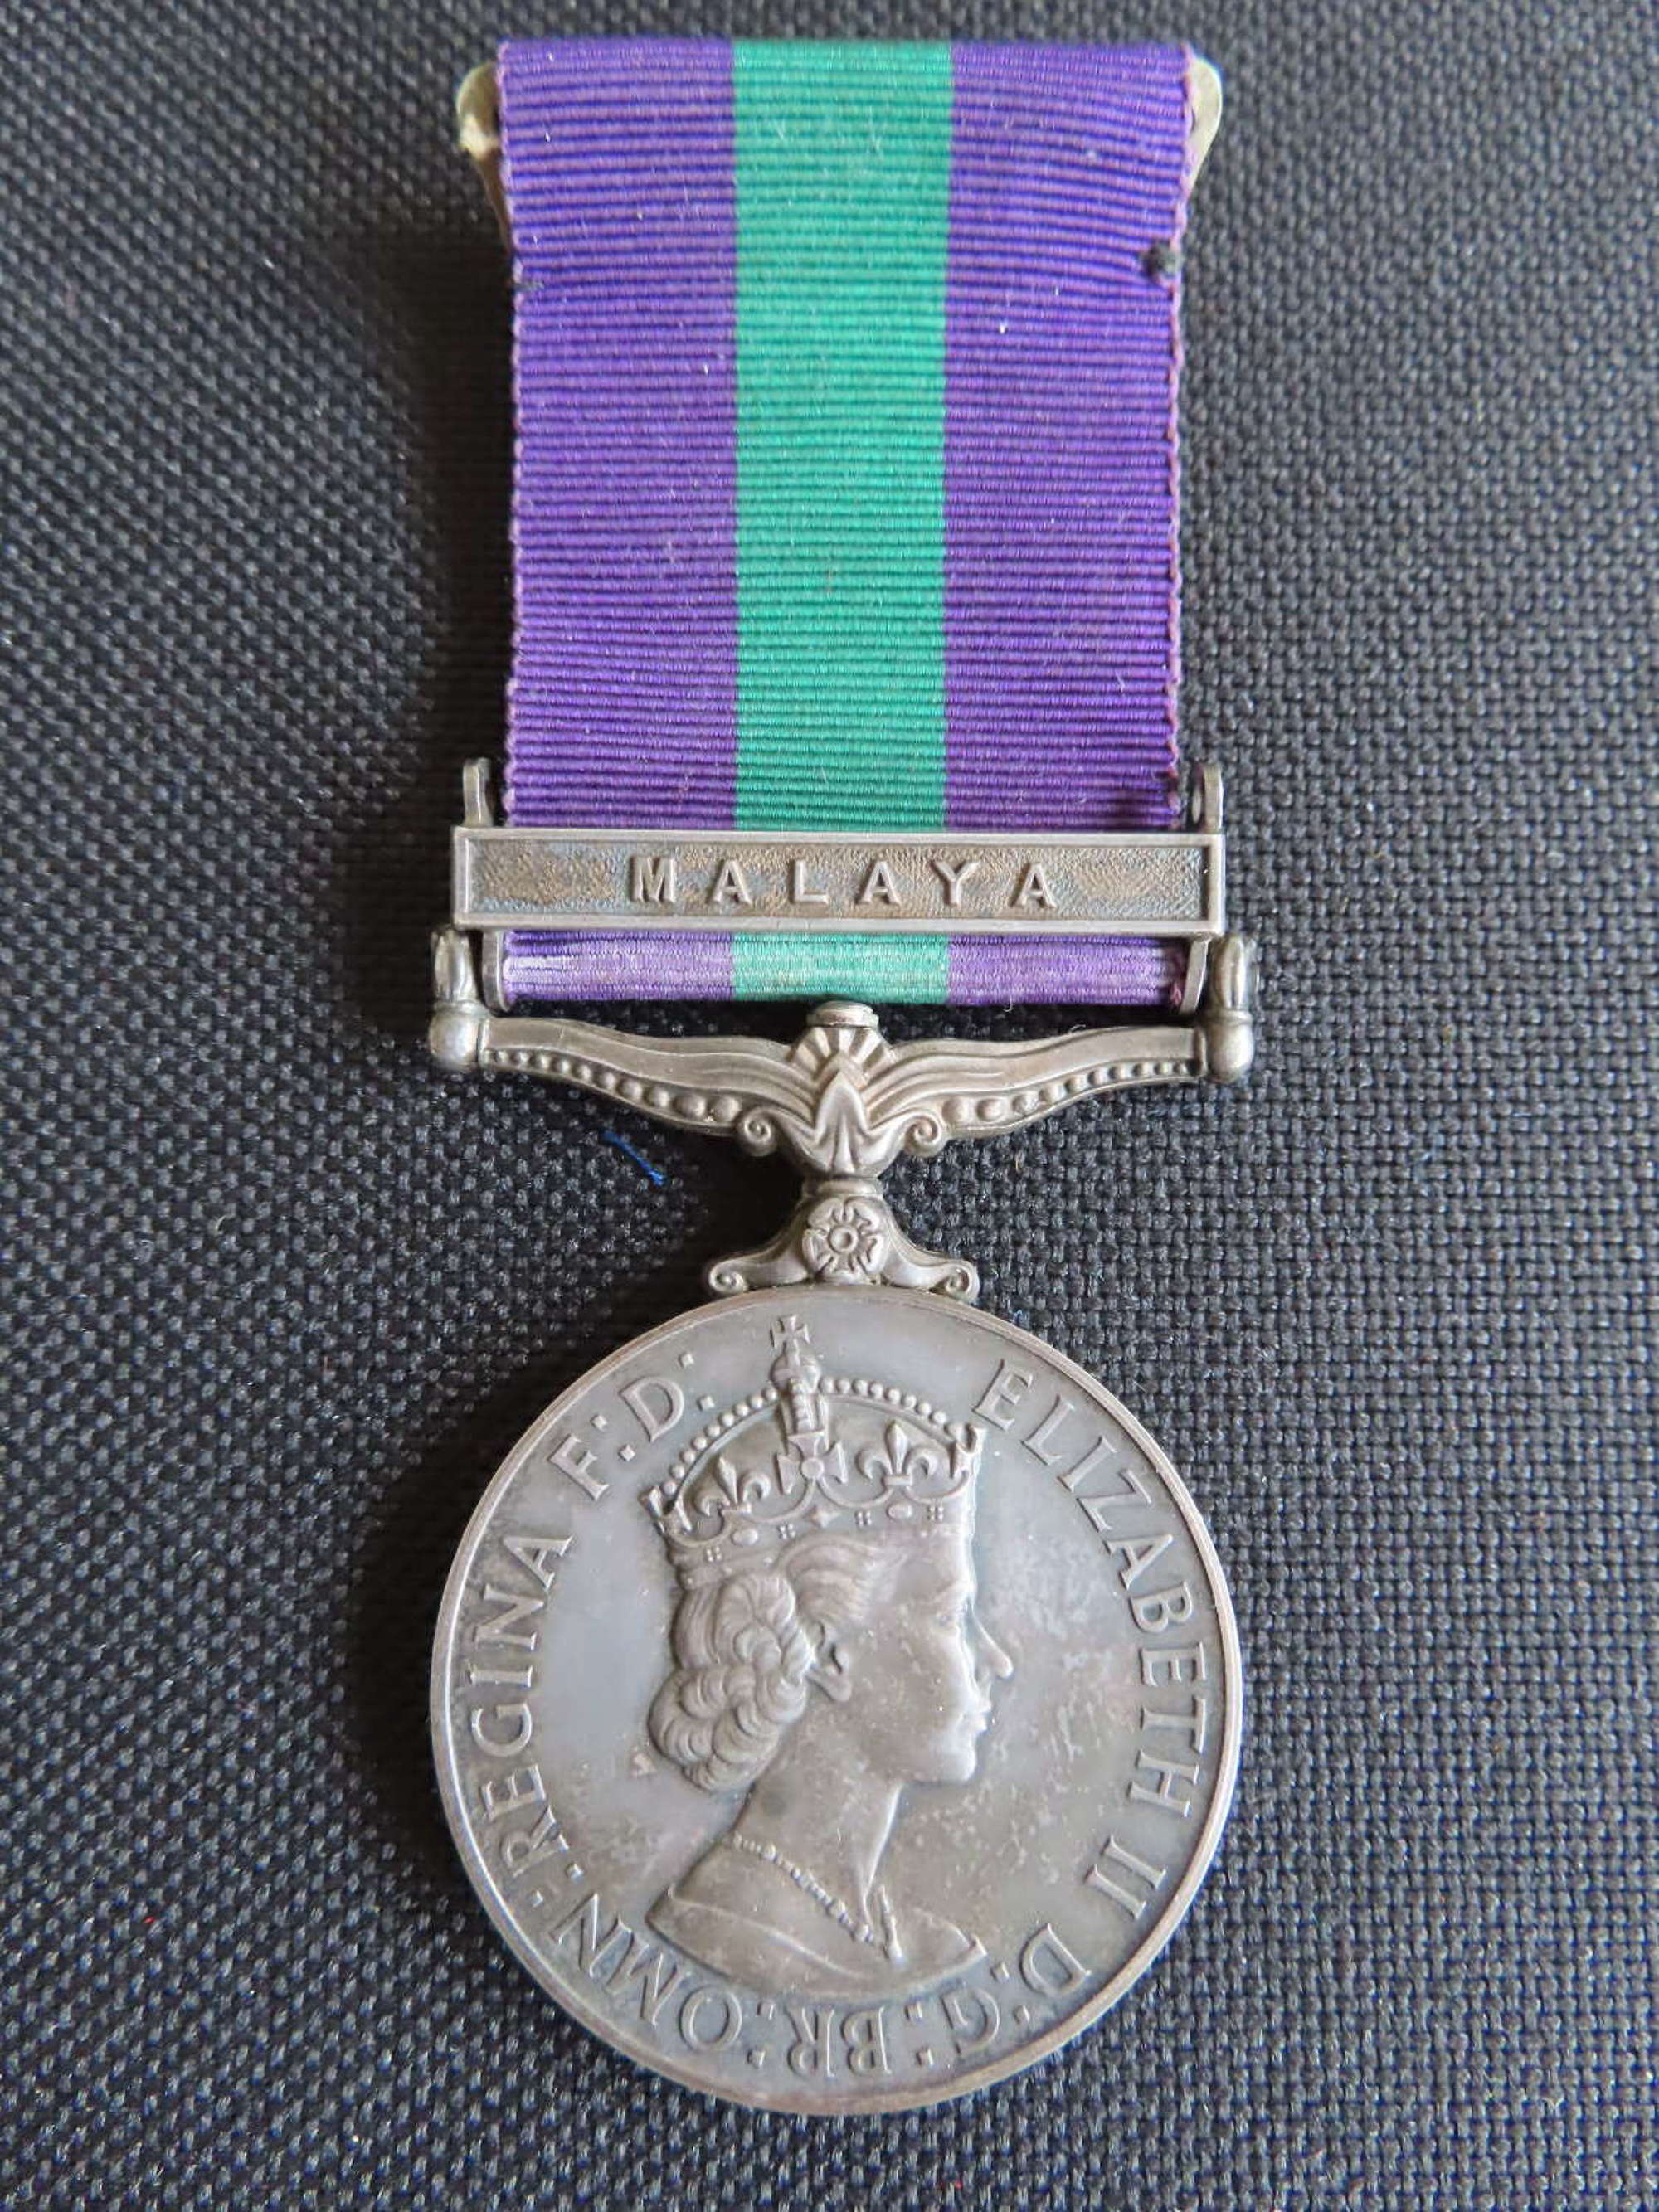 Malaya general service medal awarded to Cfn B Porter R.E.M.E.